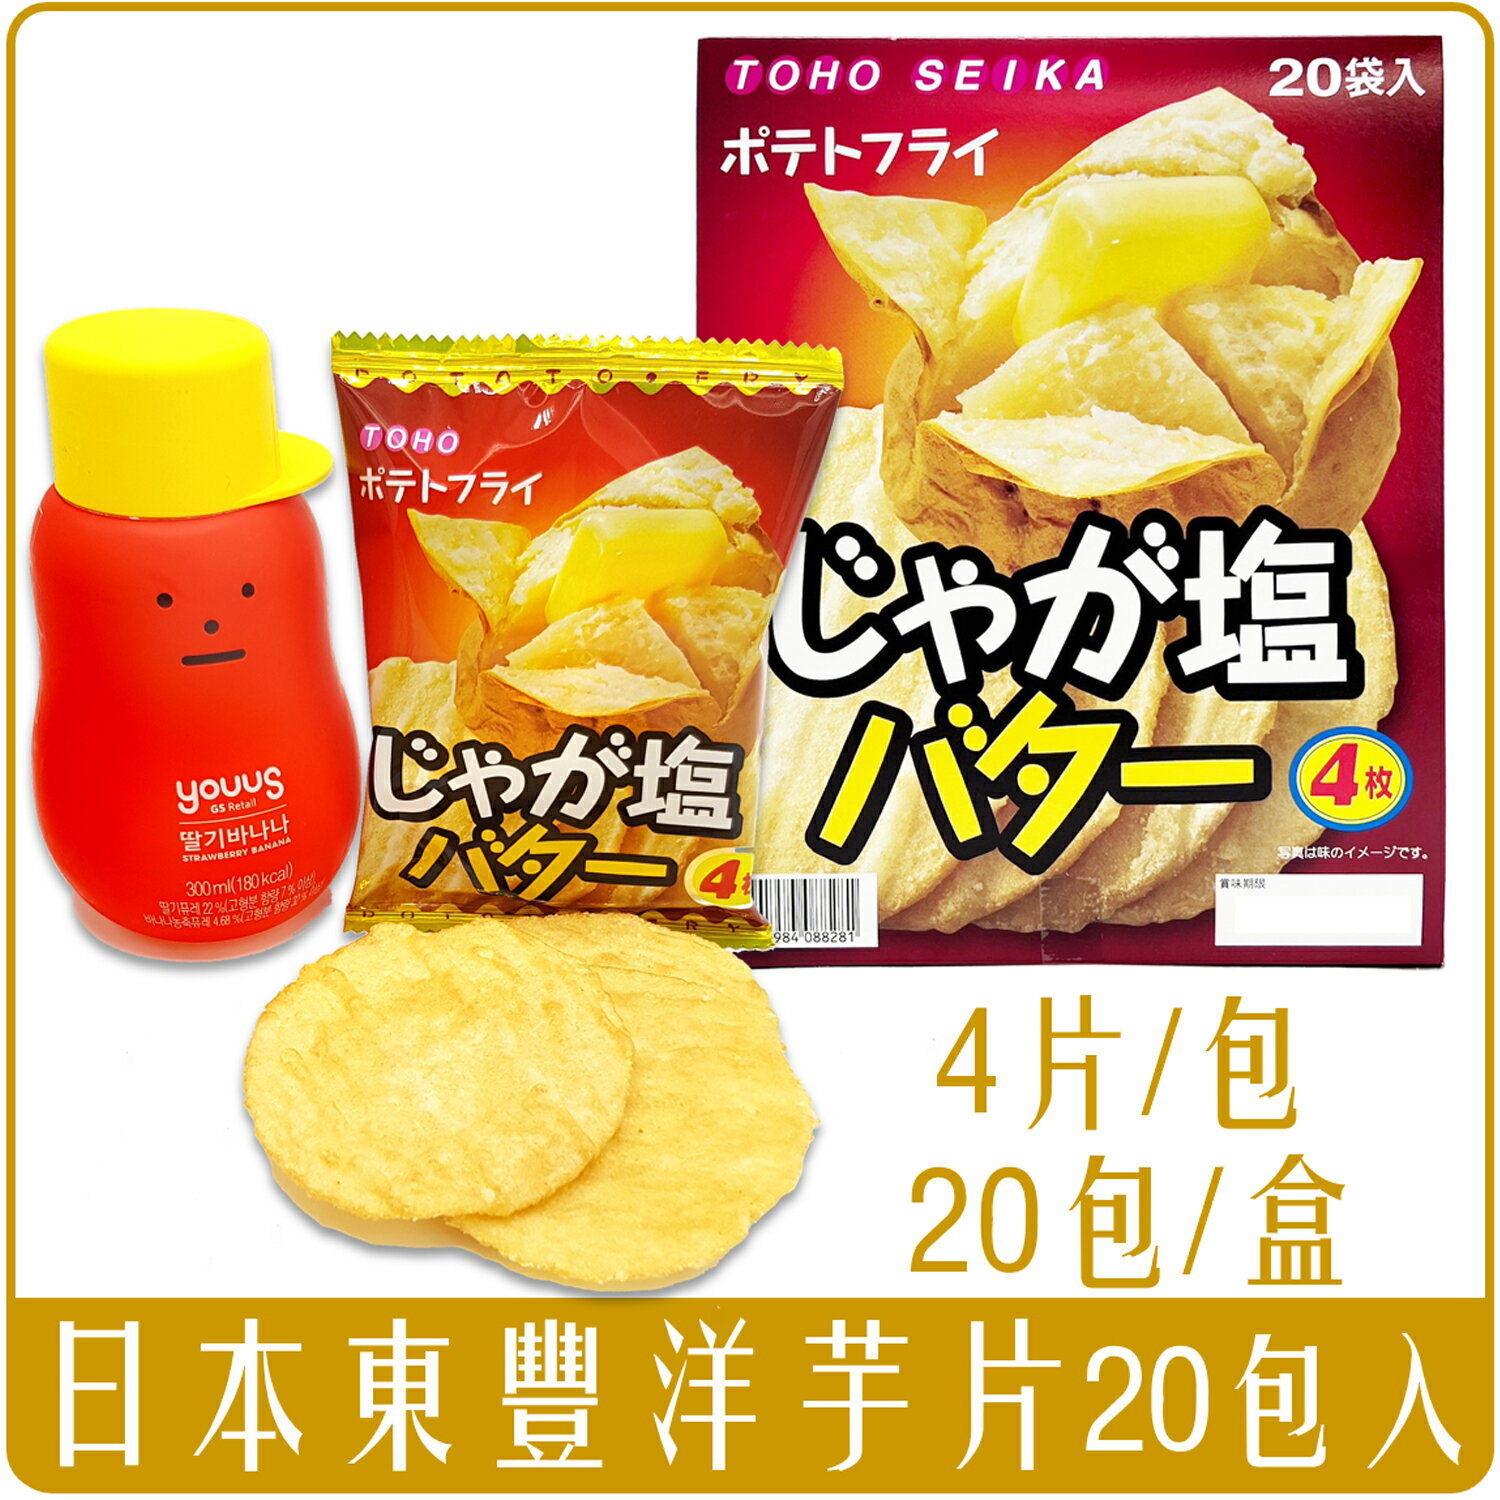 《 Chara 微百貨 》 日本 東豐 製菓 奶油 薯片 洋芋片 薯餅 20袋 盒裝 220g 鹽味 炸雞 口味